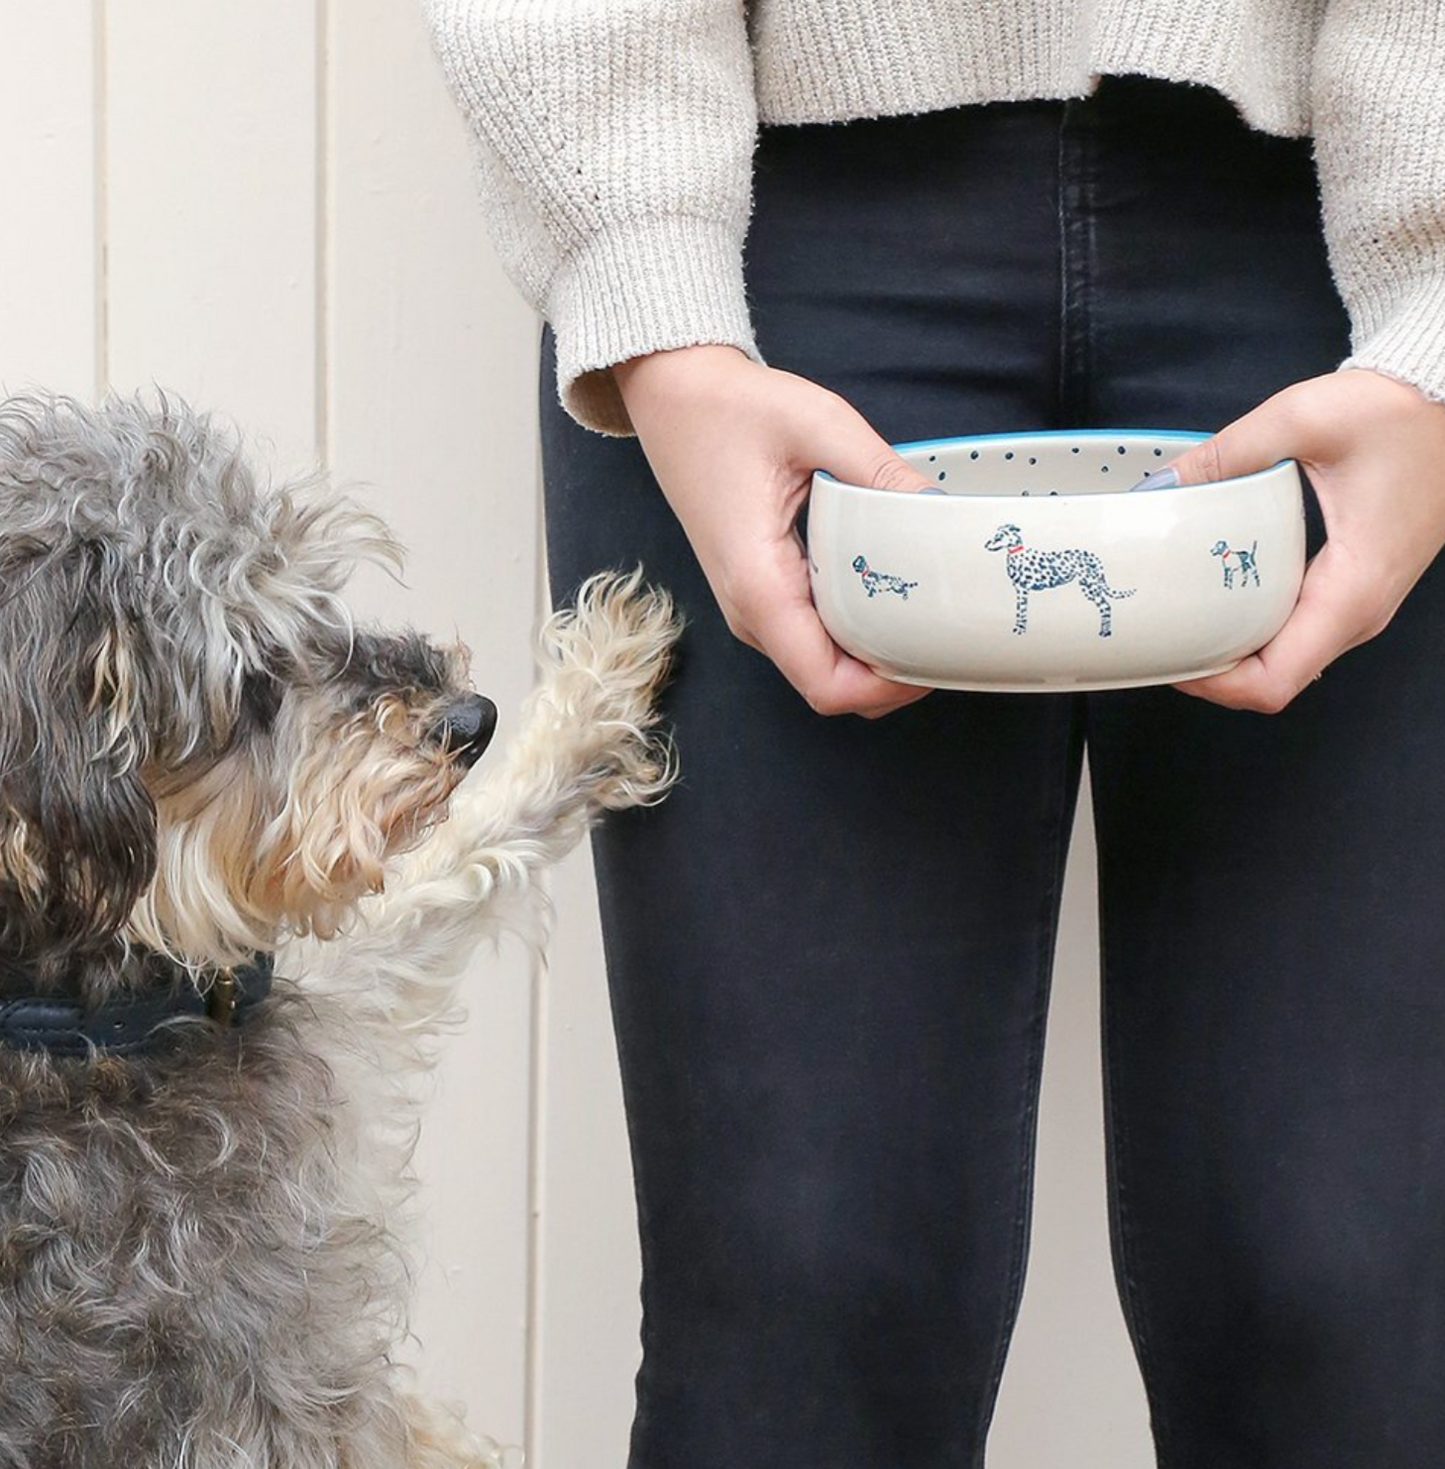 Sophie Allport Stoneware Dog Bowl, Fetch